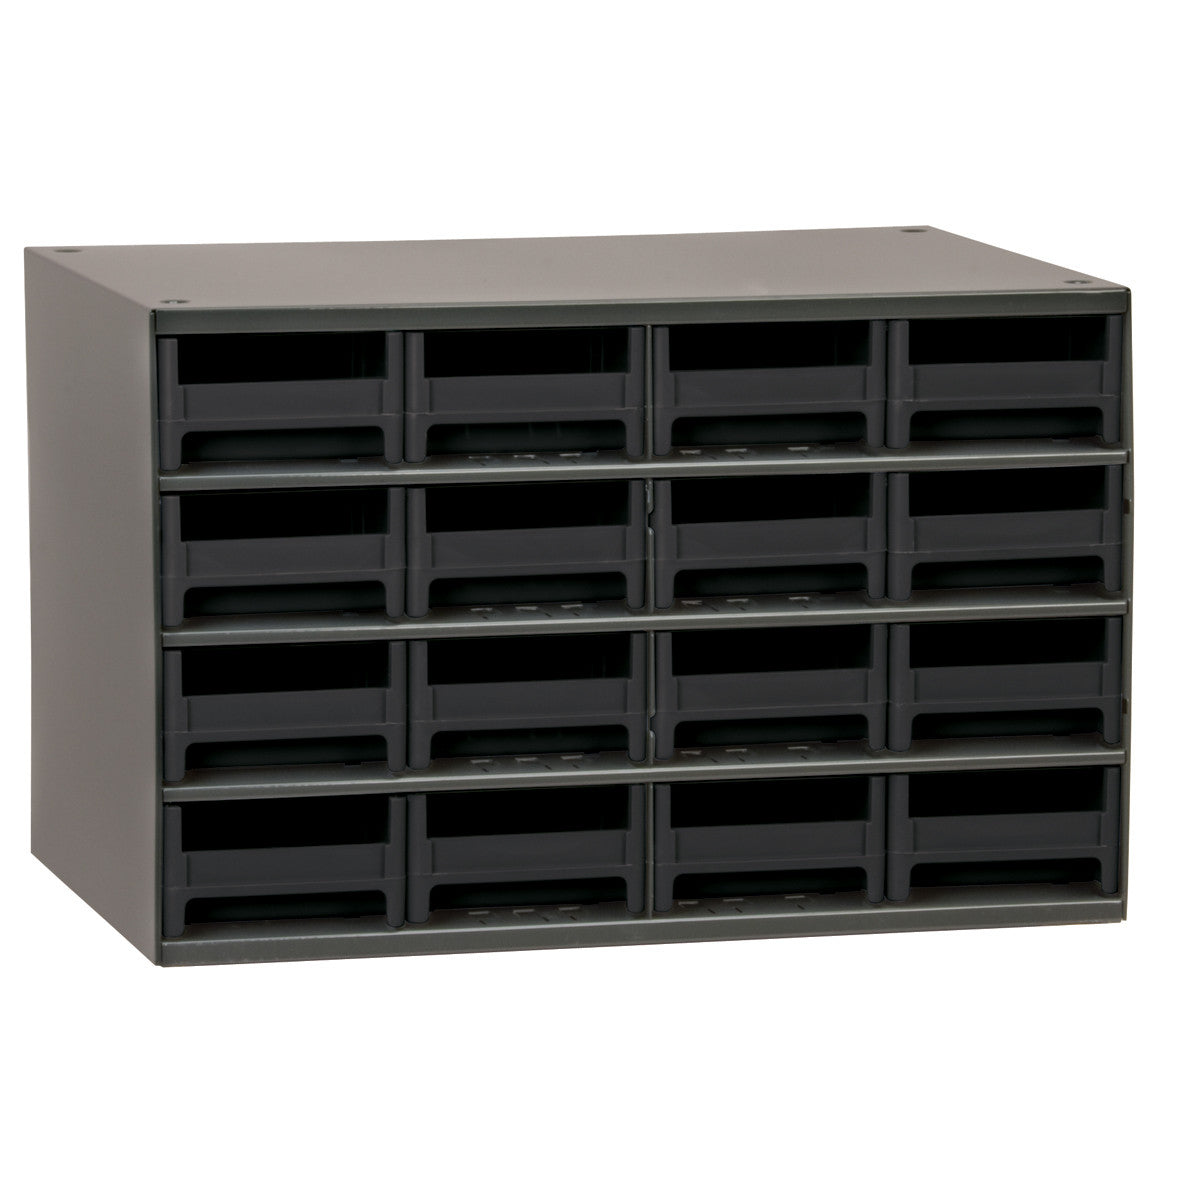 Akro-Mils 19416-Gray - 19-Series 16 Drawer Modular Steel Storage Cabinet - 4 x 2.125 x 10.5625 - Gray